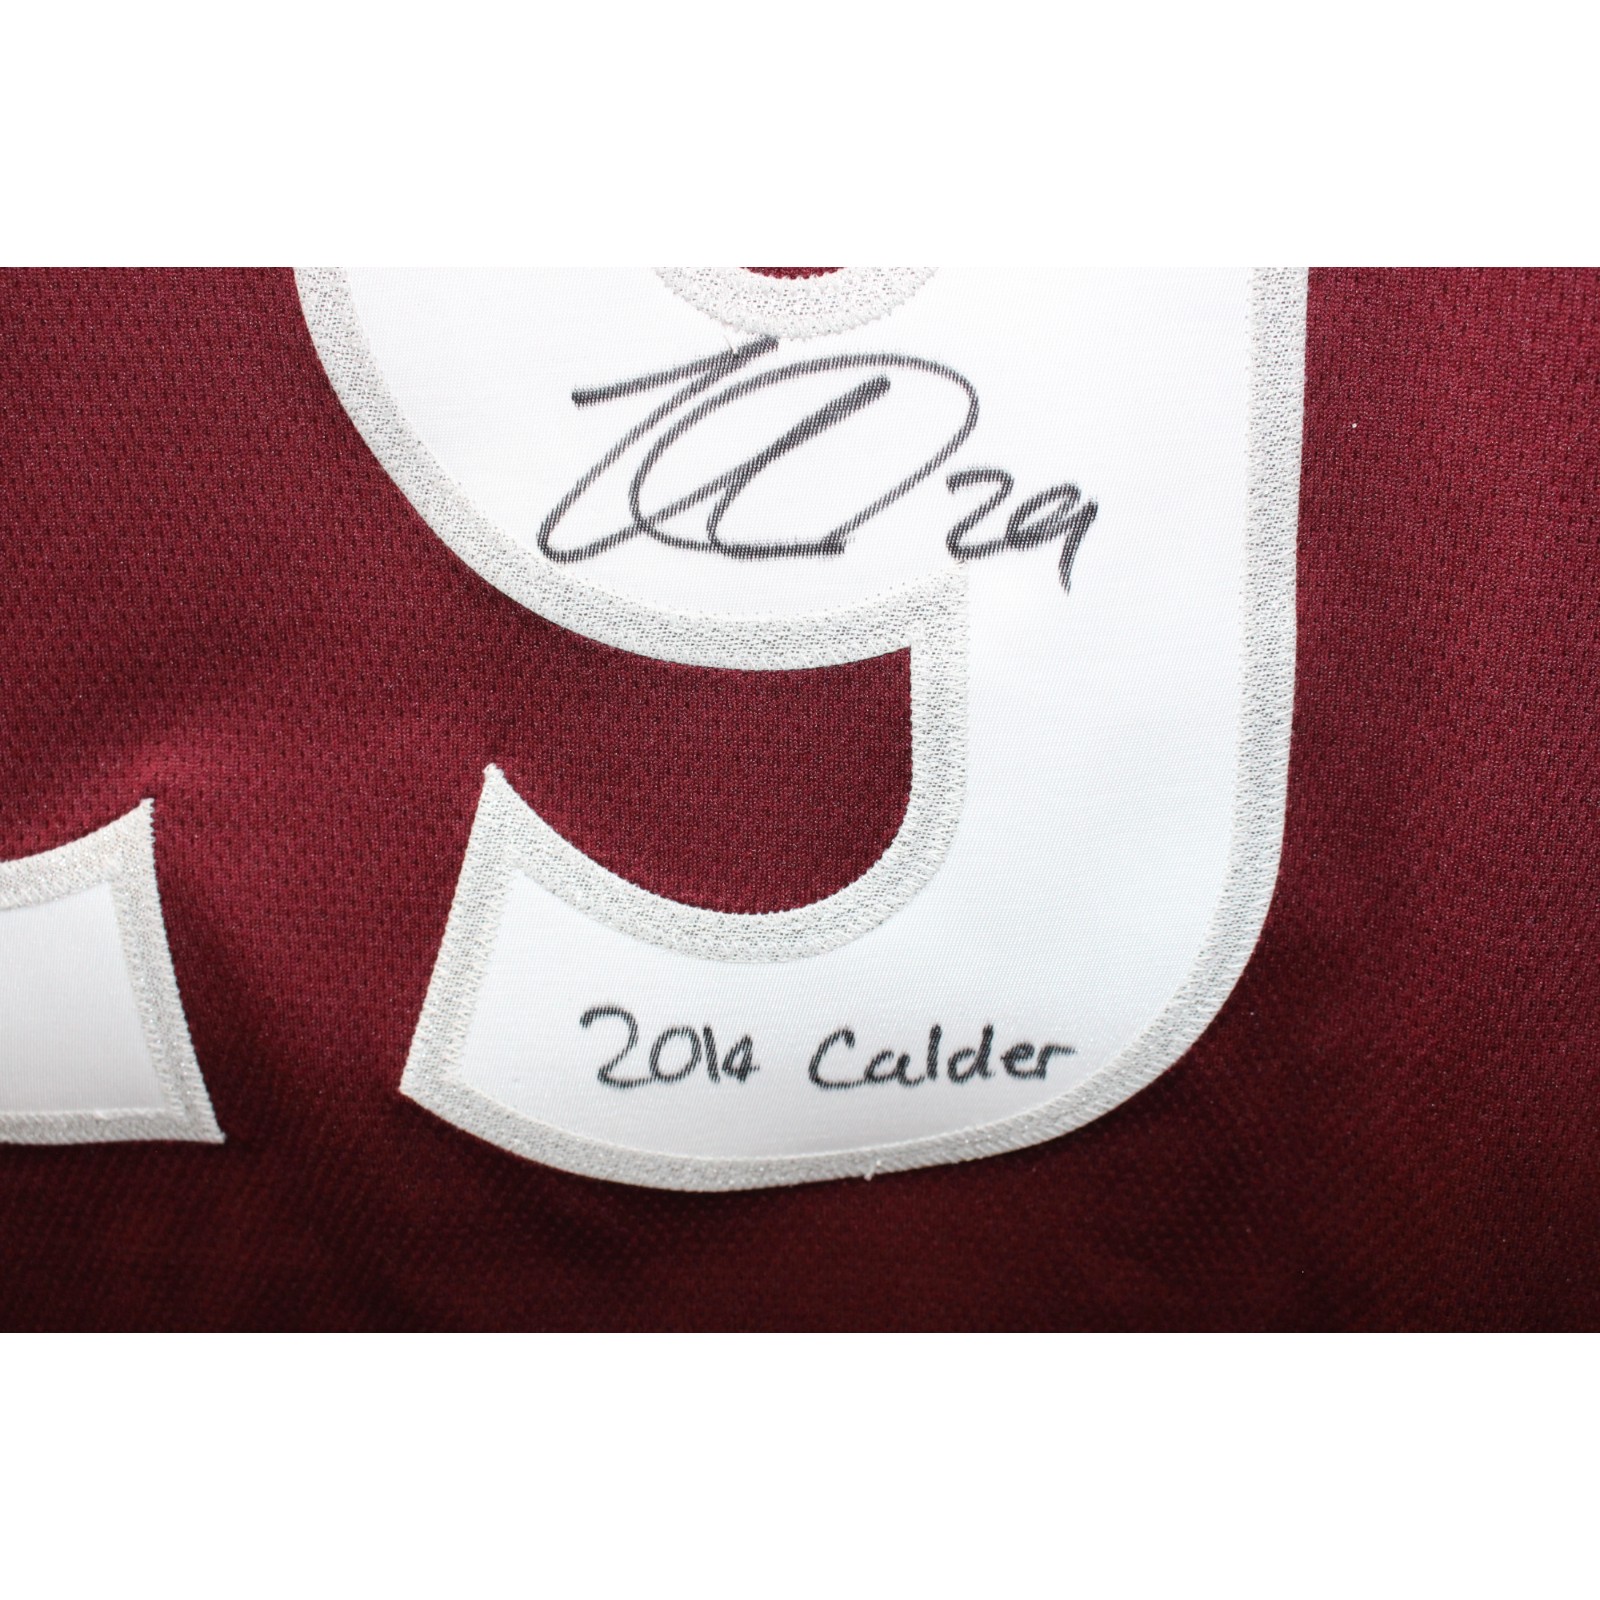 Nate MacKinnon Signed Colorado Avalanche Red Jersey 2014 Calder JSA